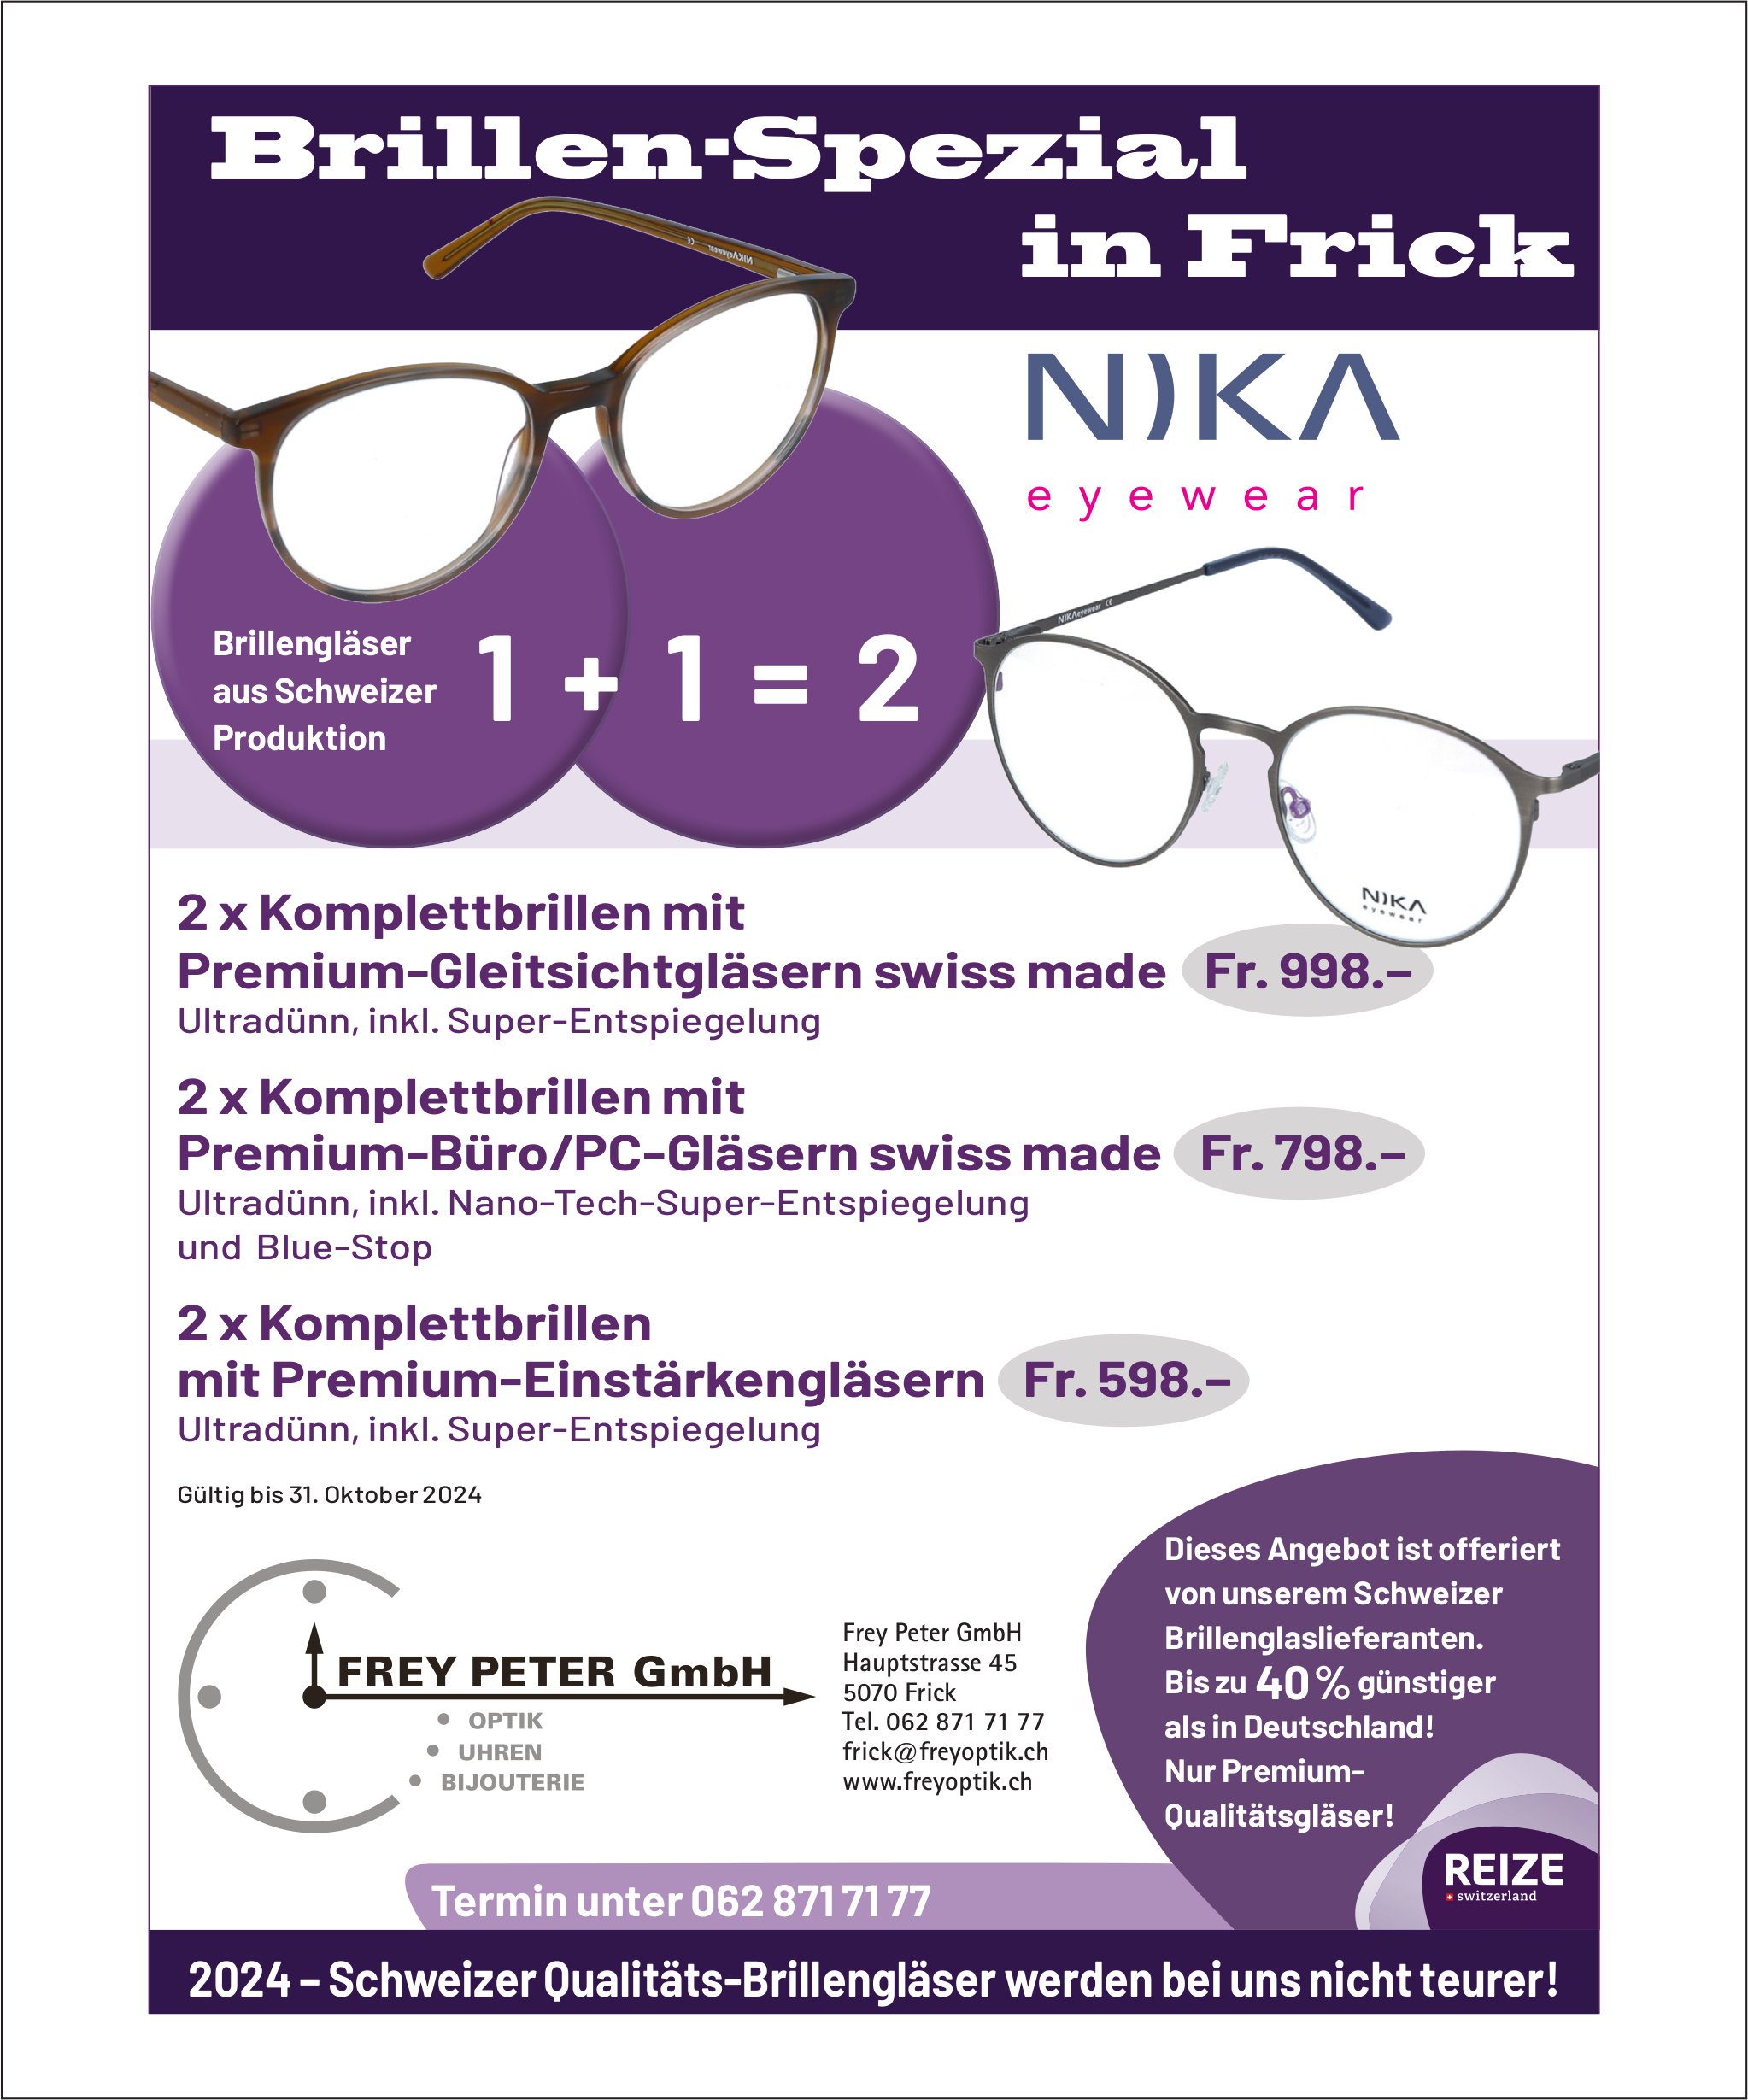 Frey Peter GmbH, Frick - Brillen-Spezial